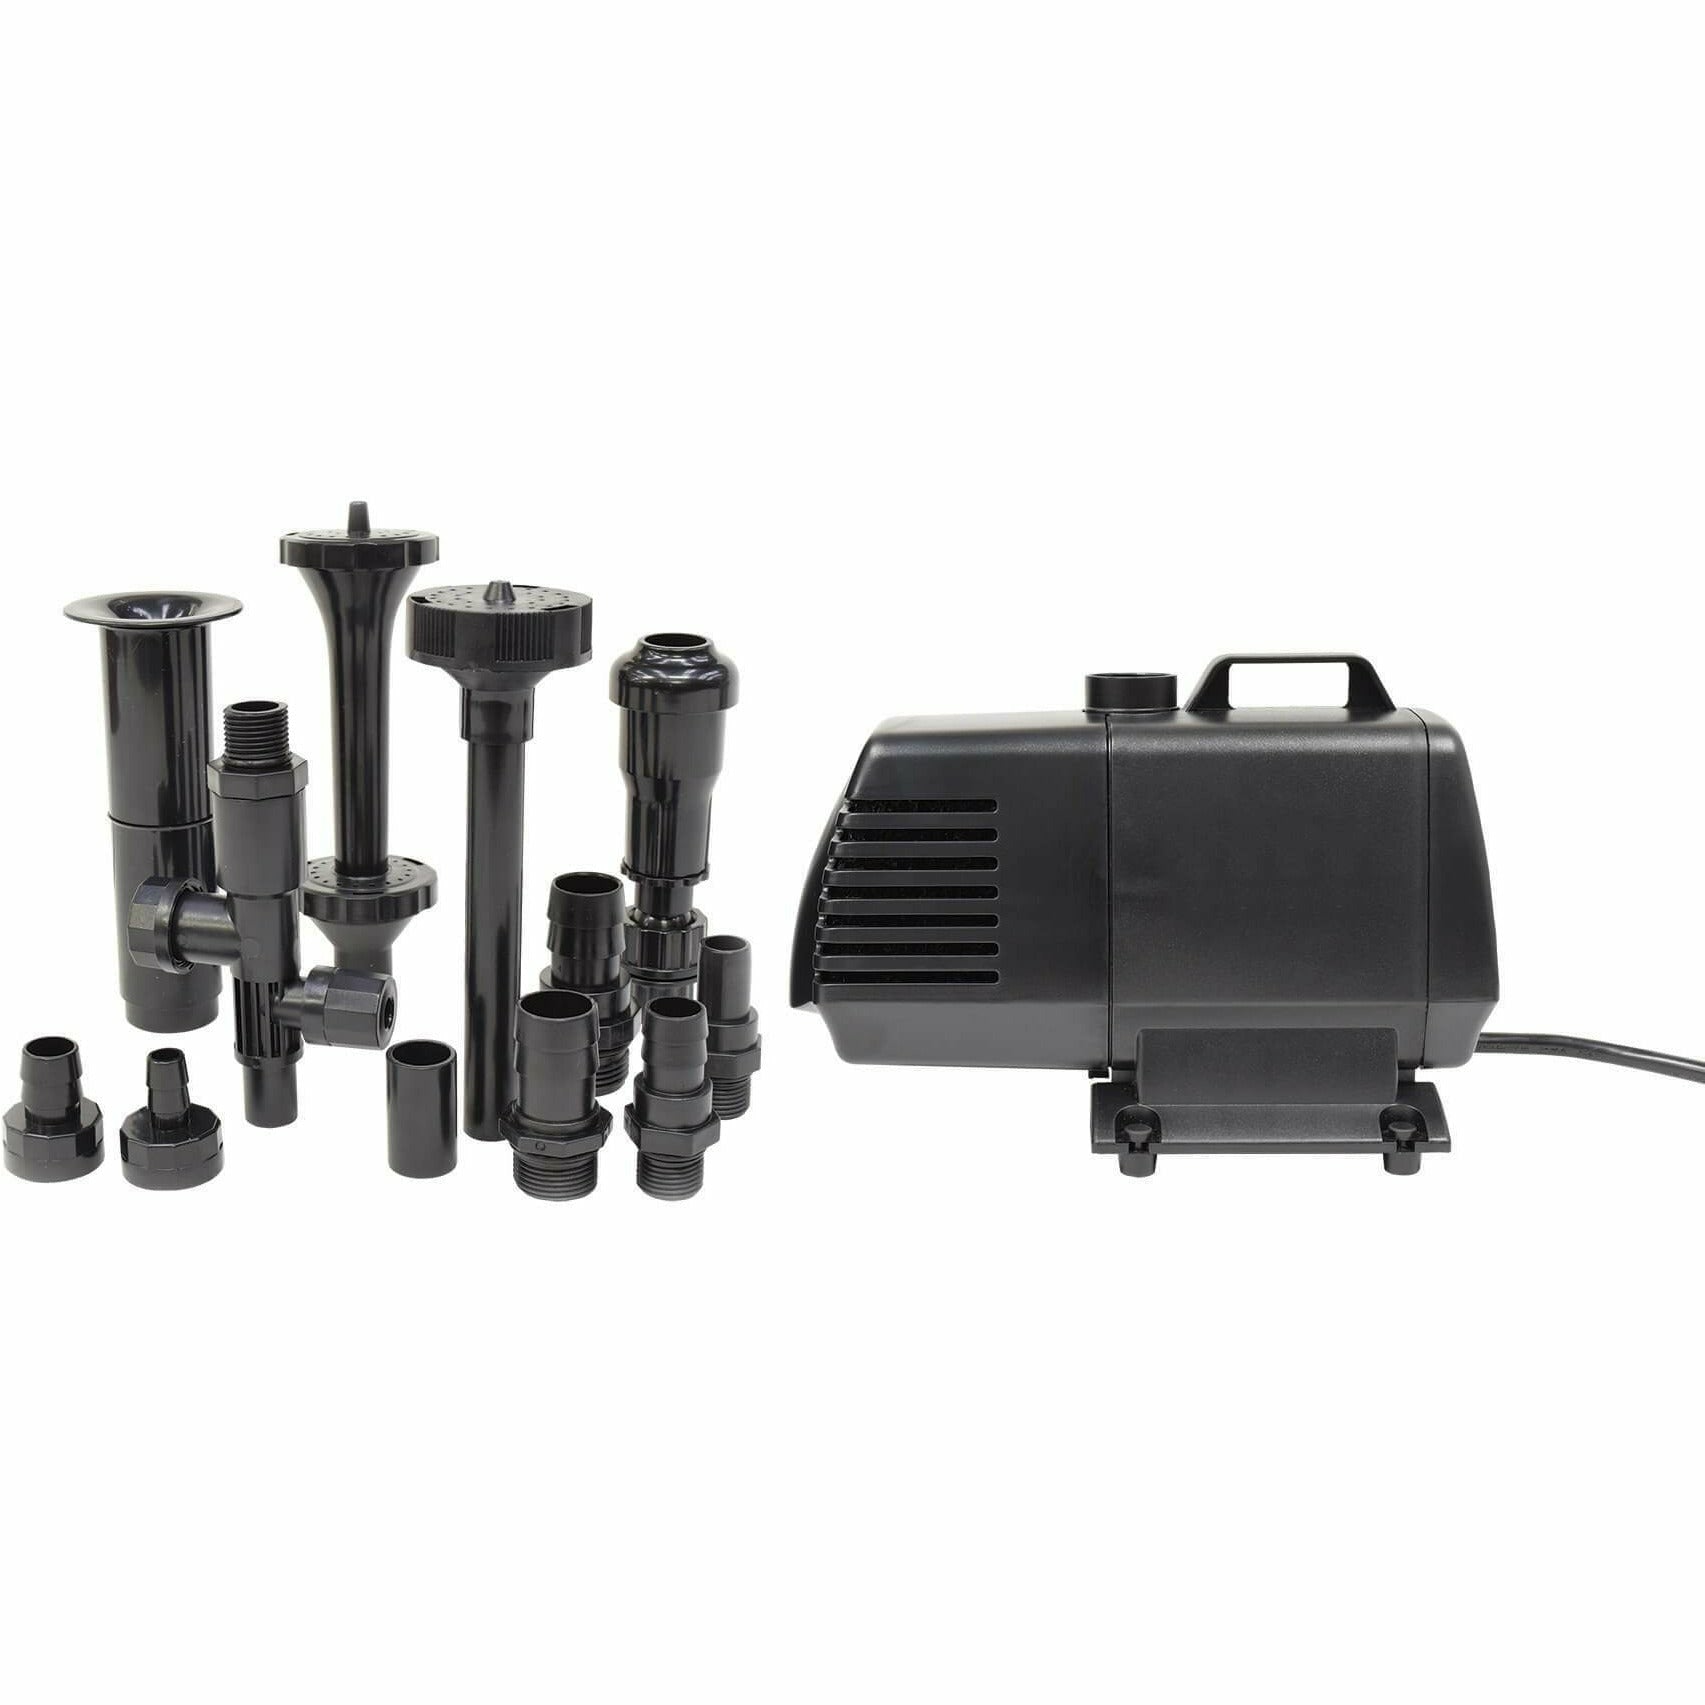 EP1350 Submersible Mag Drive Pump 1350 GPH - American Pond Supplies Easy Pro Mag Drive Pumps Mag Drive Pumps